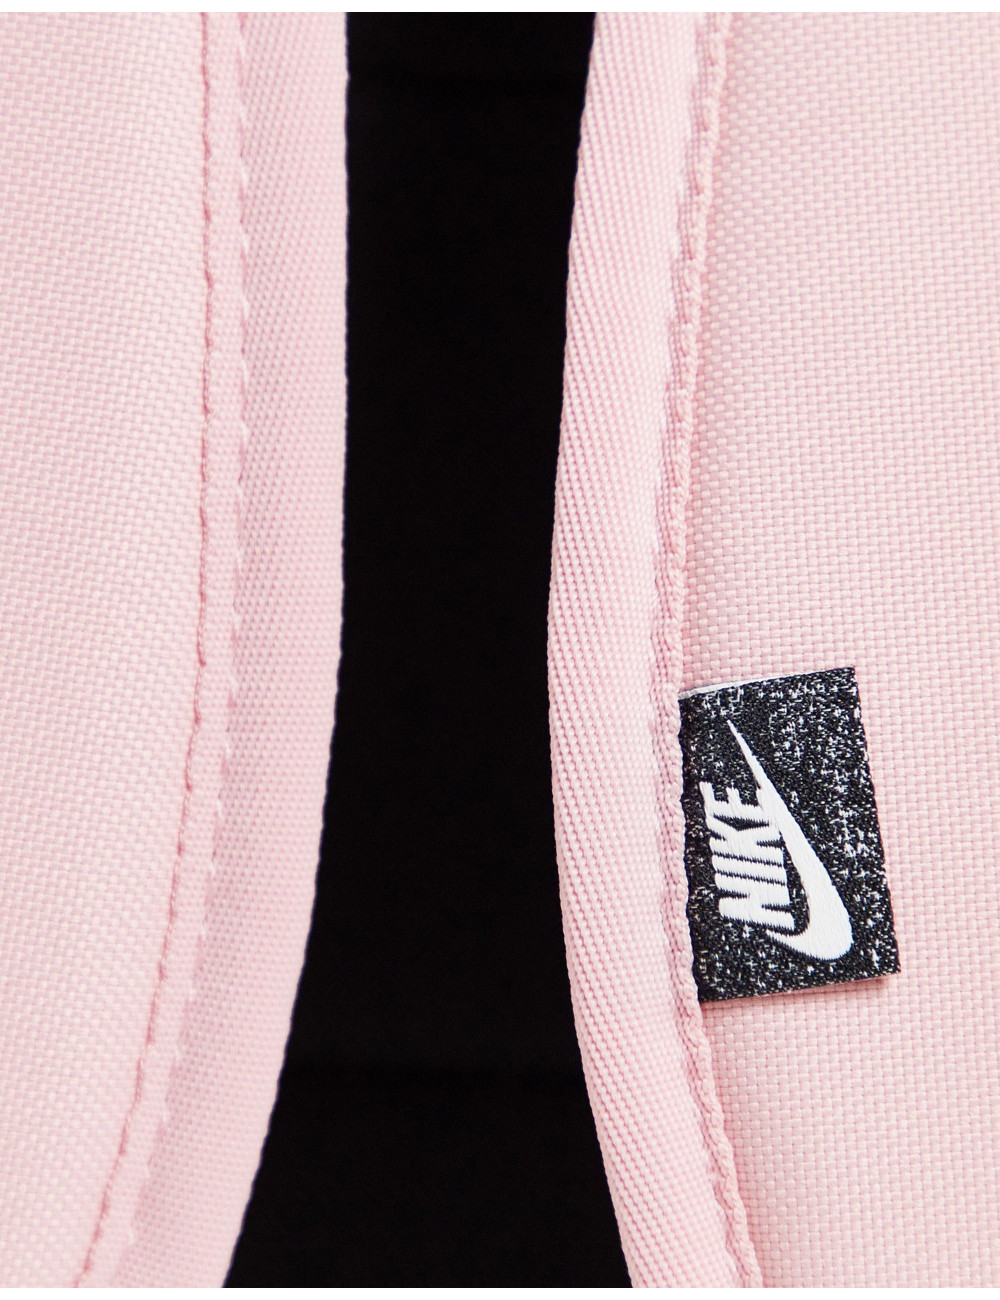 Nike heritage backpack in pink